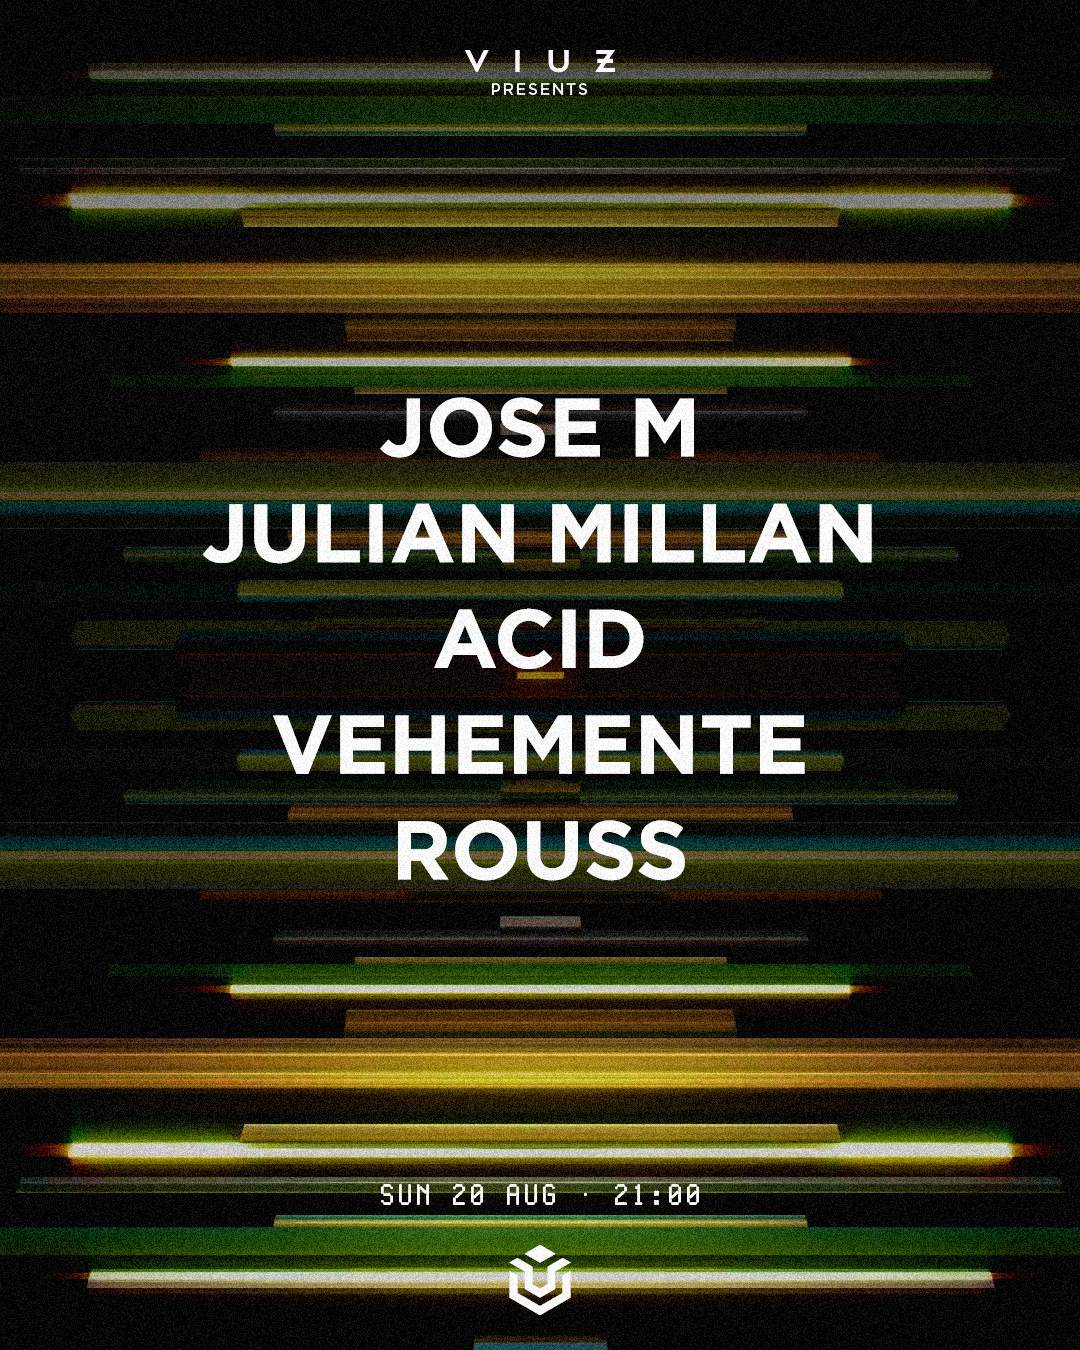 José M, Julian Millan, Acid, Vehemente, Rouss - フライヤー表